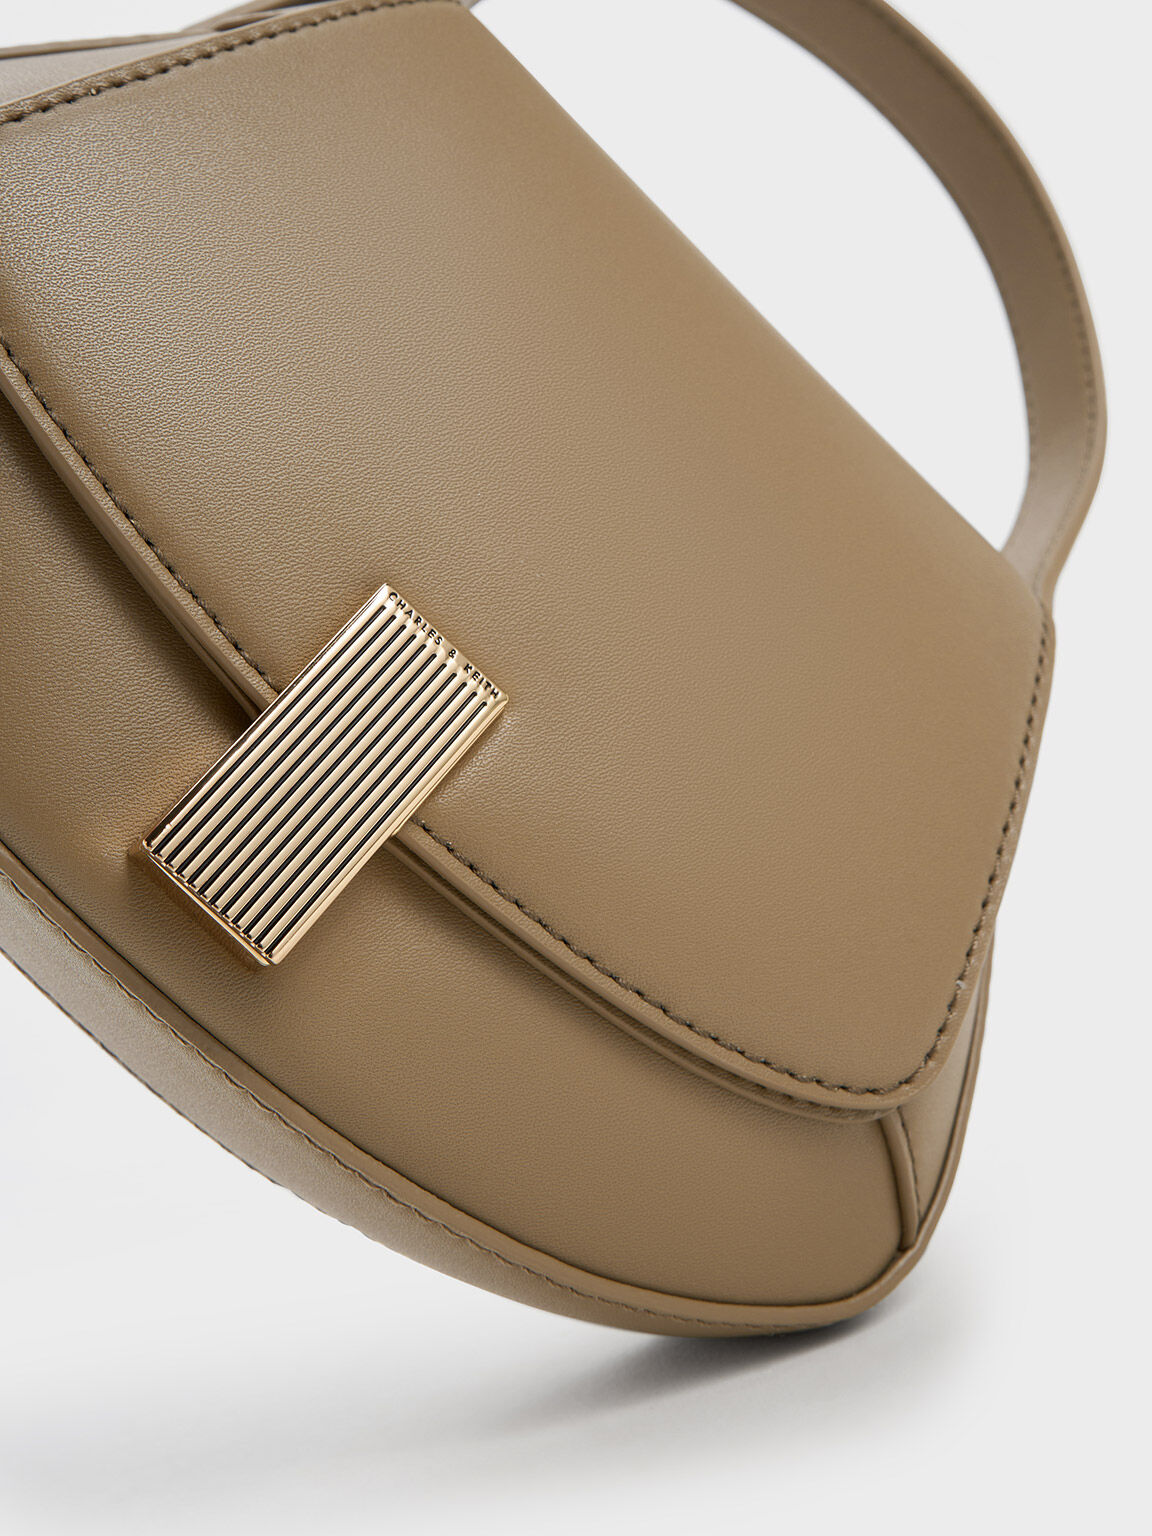 Celine Micro Belt Bag - Fashion Jackson